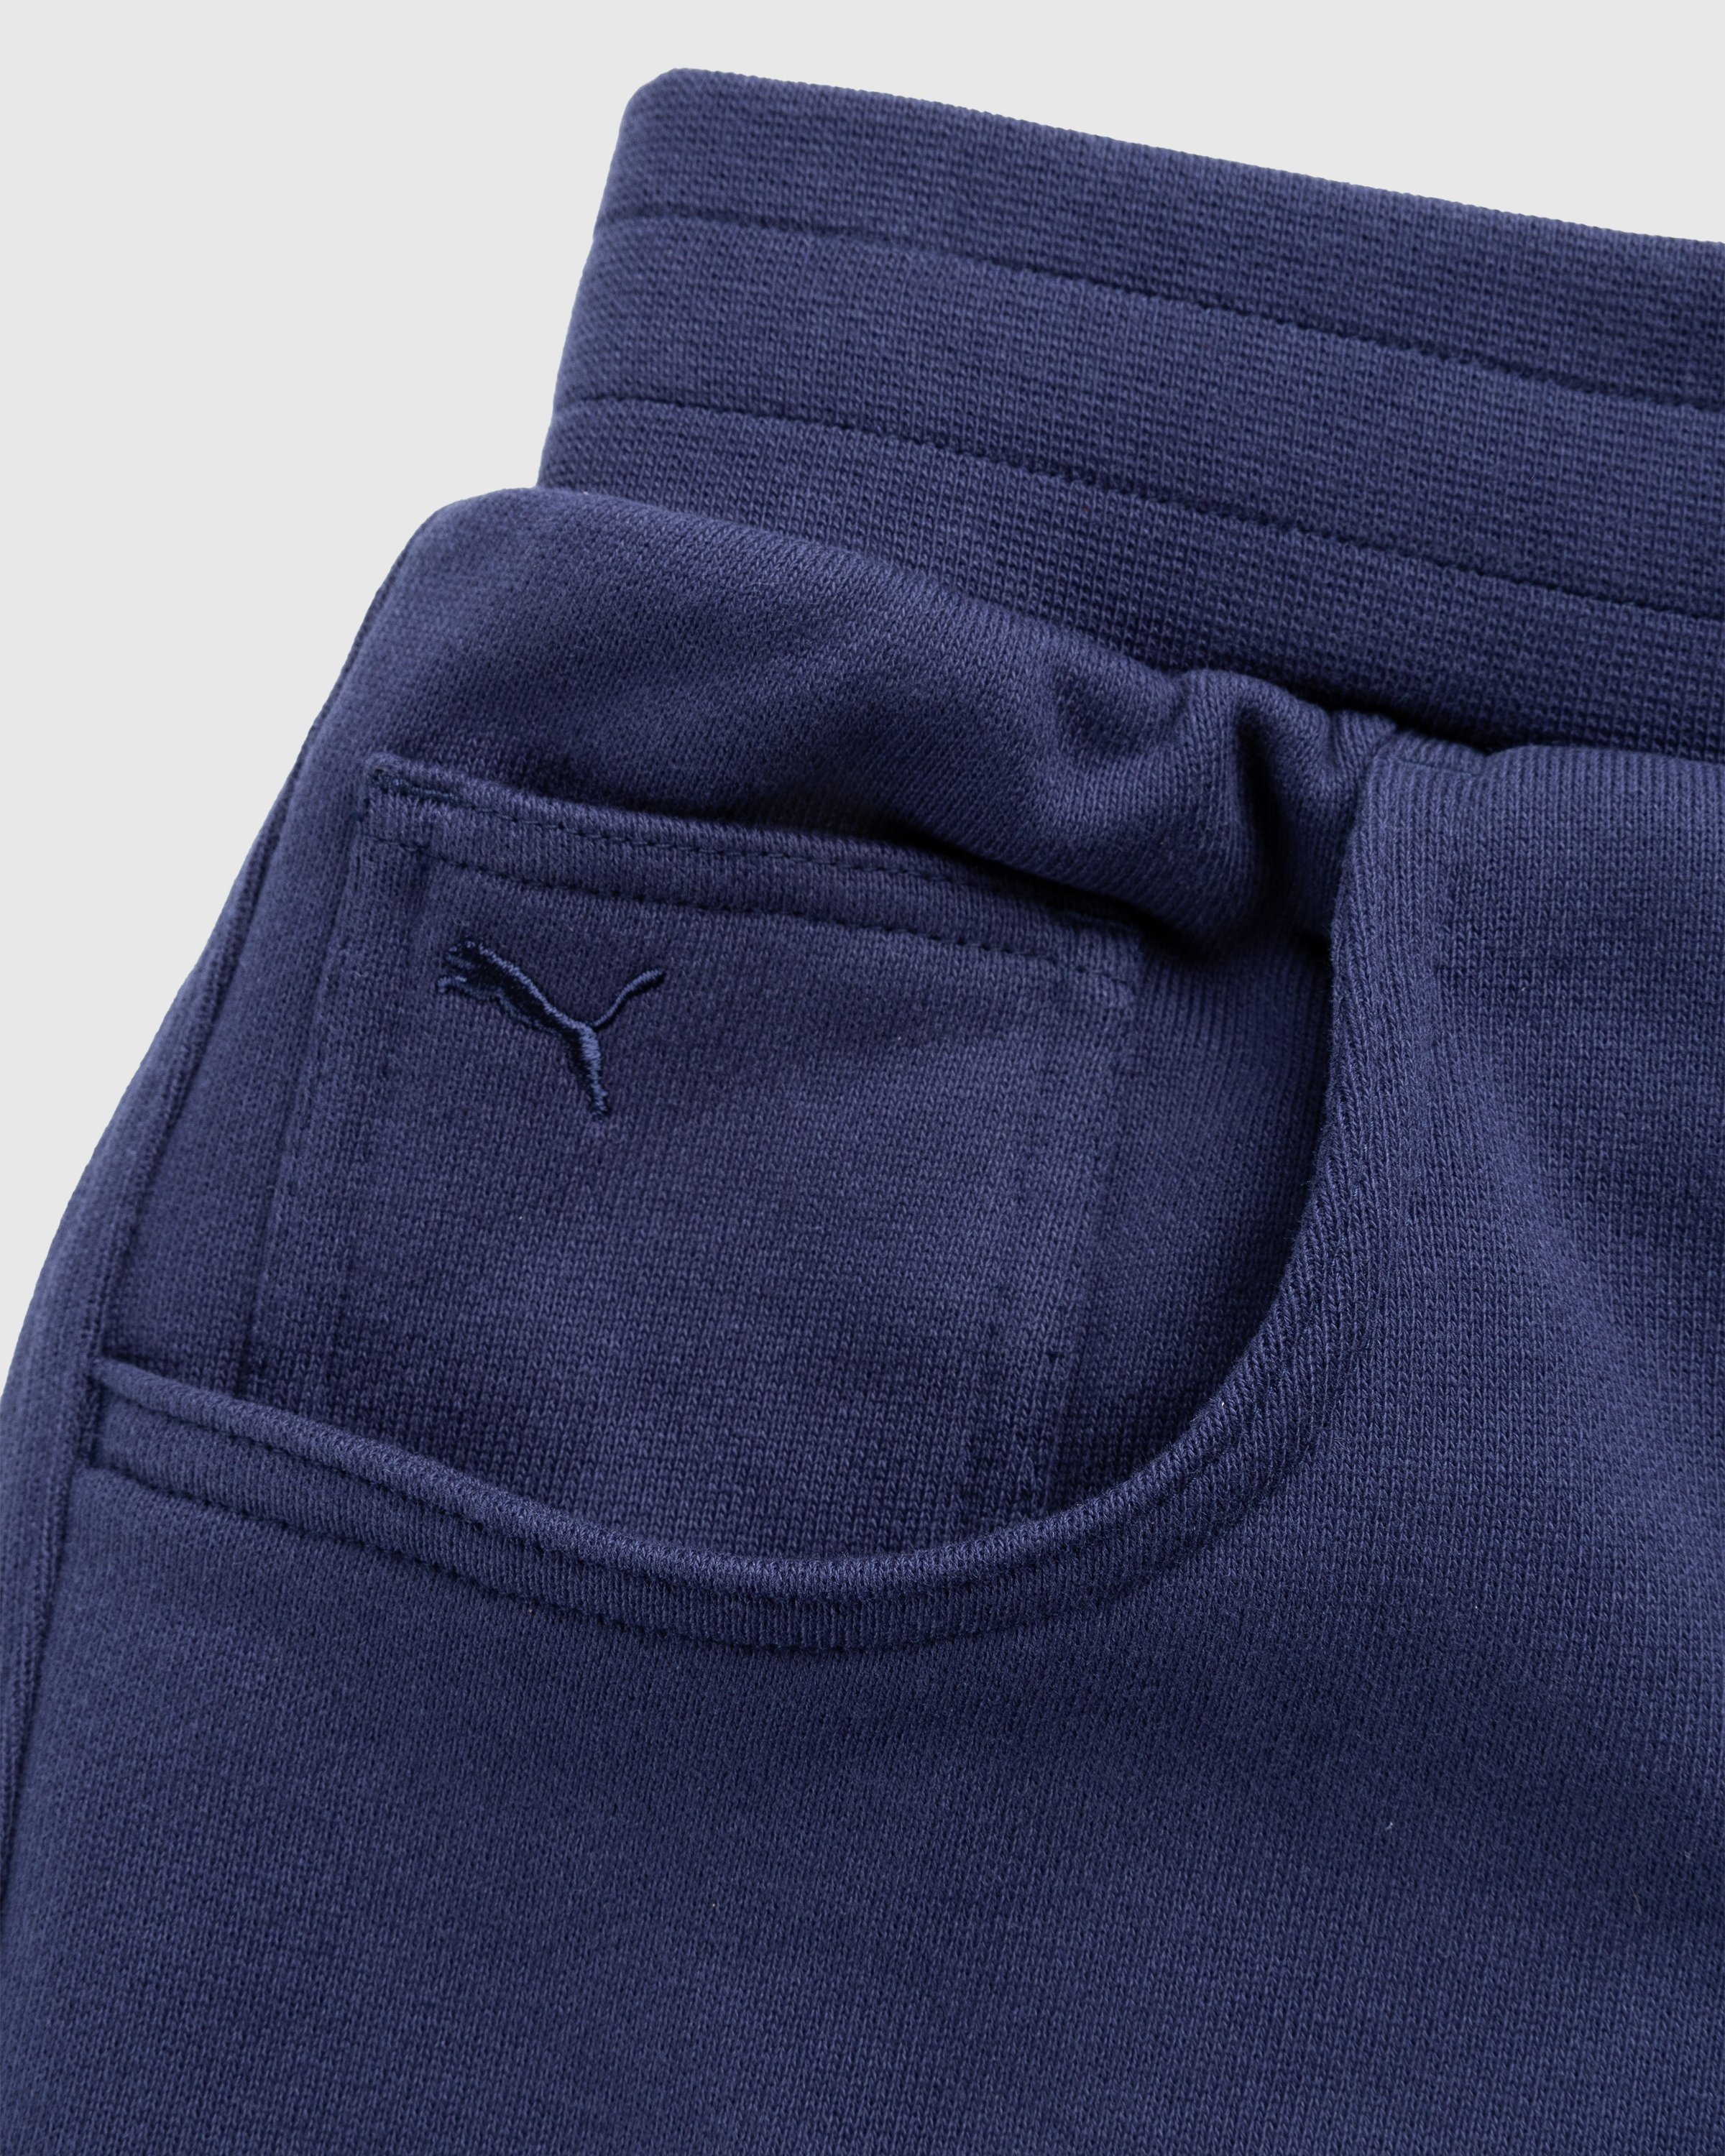 Puma x Noah – Shorts Blue - Shorts - Blue - Image 6